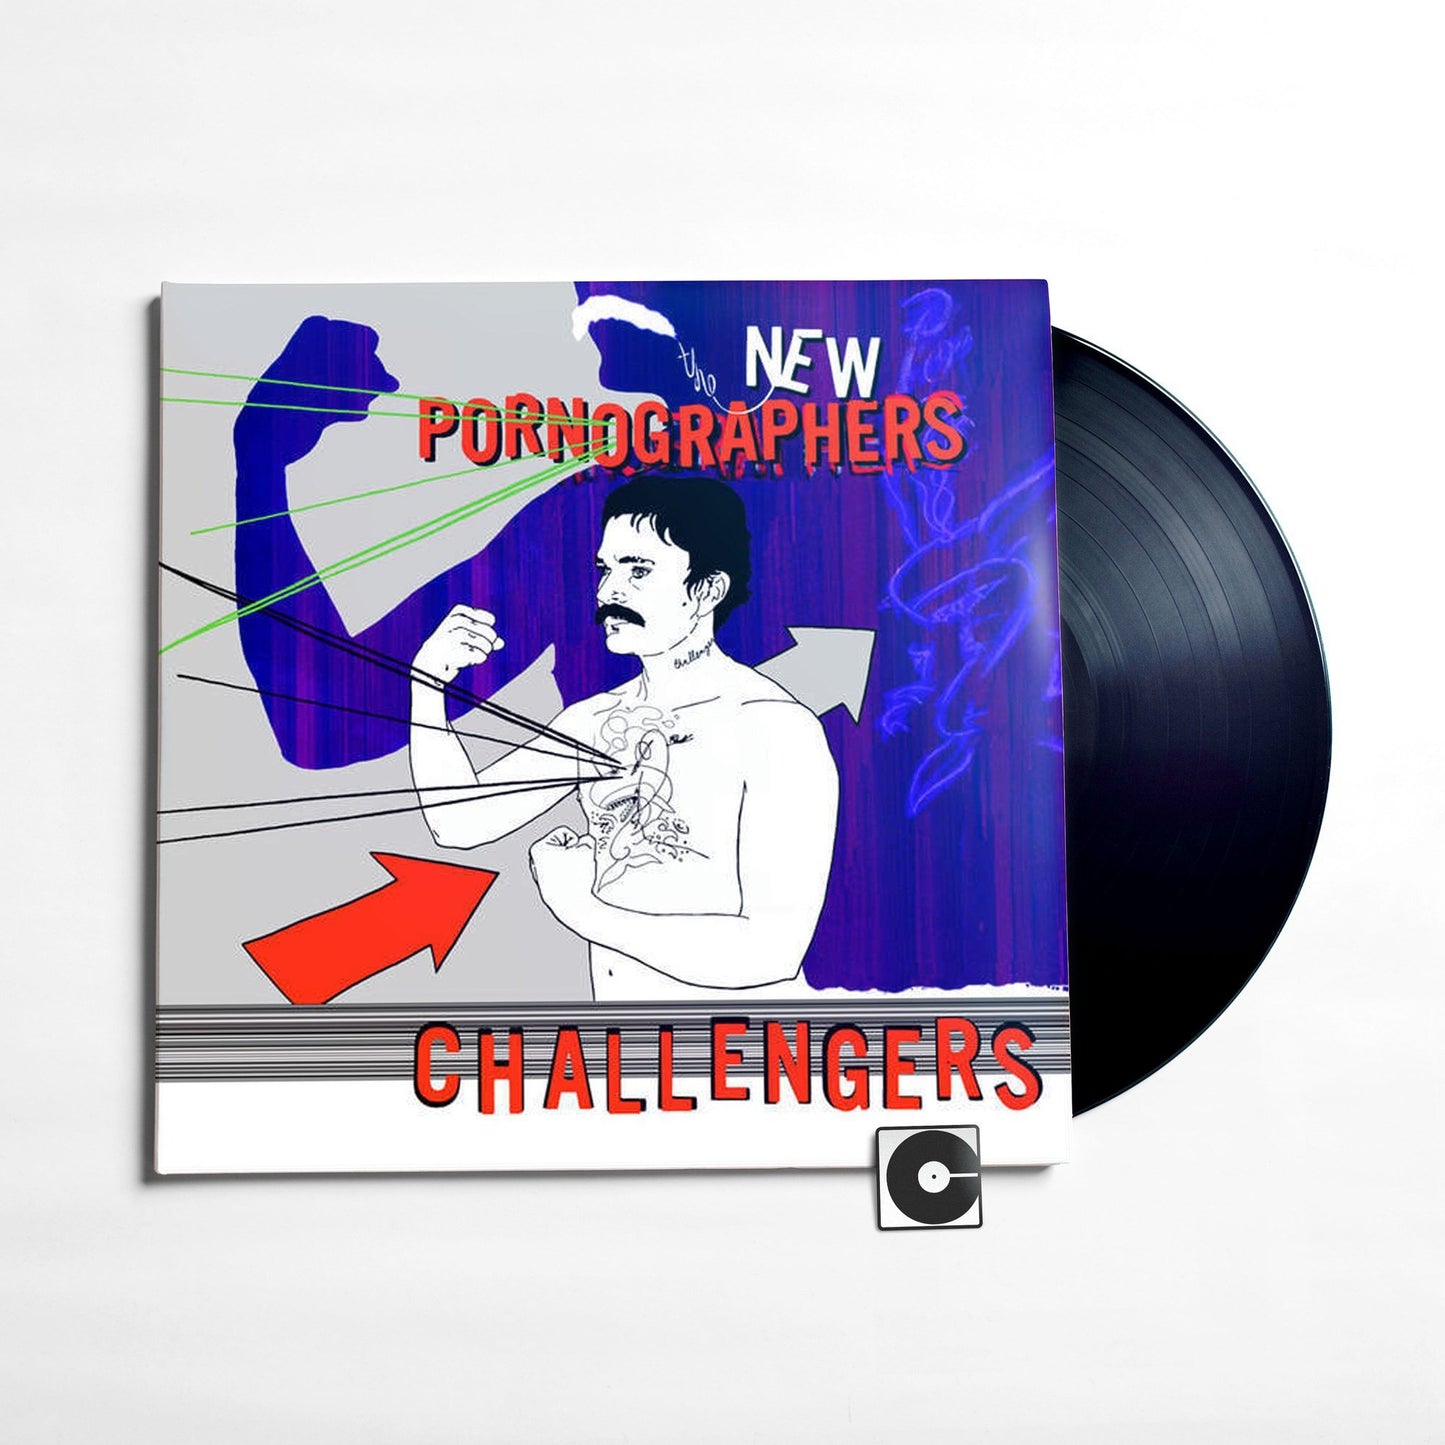 The New Pornographers - "Challenger"